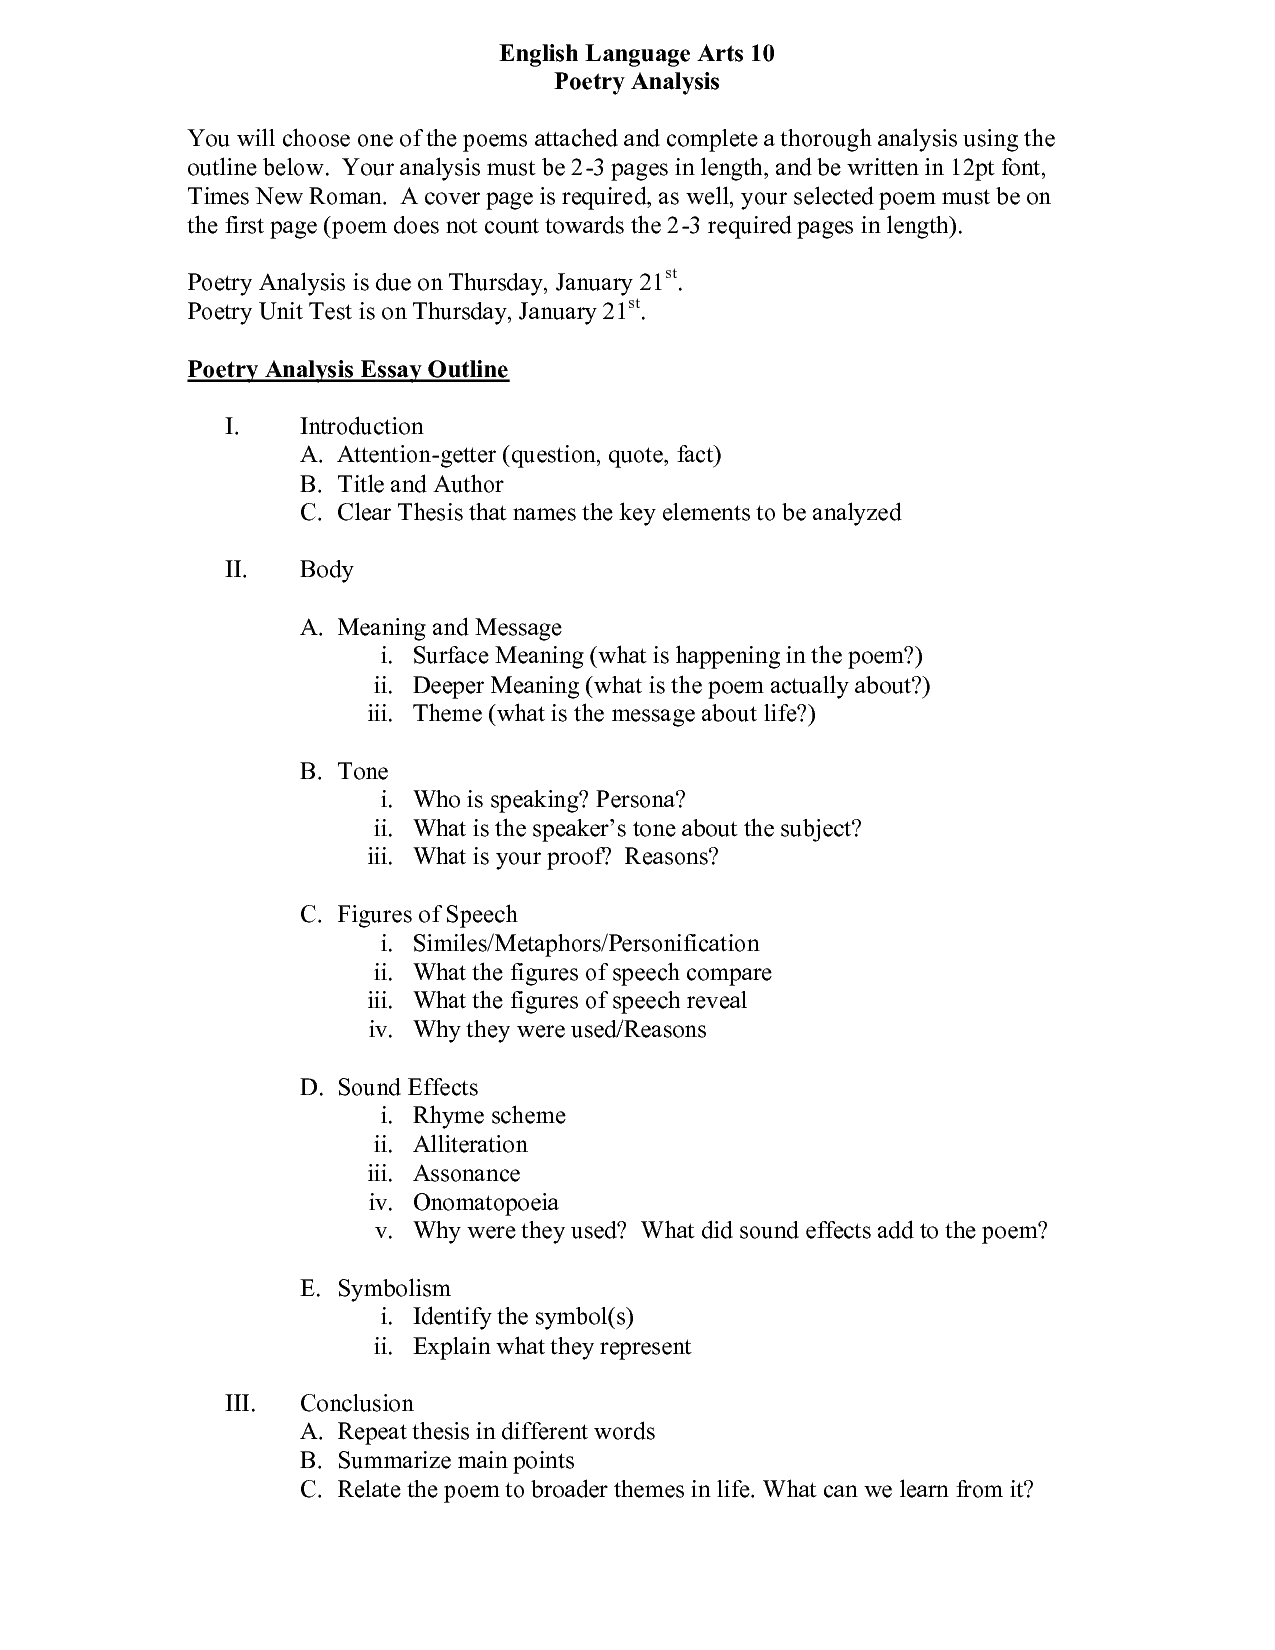 Evaluative response essay